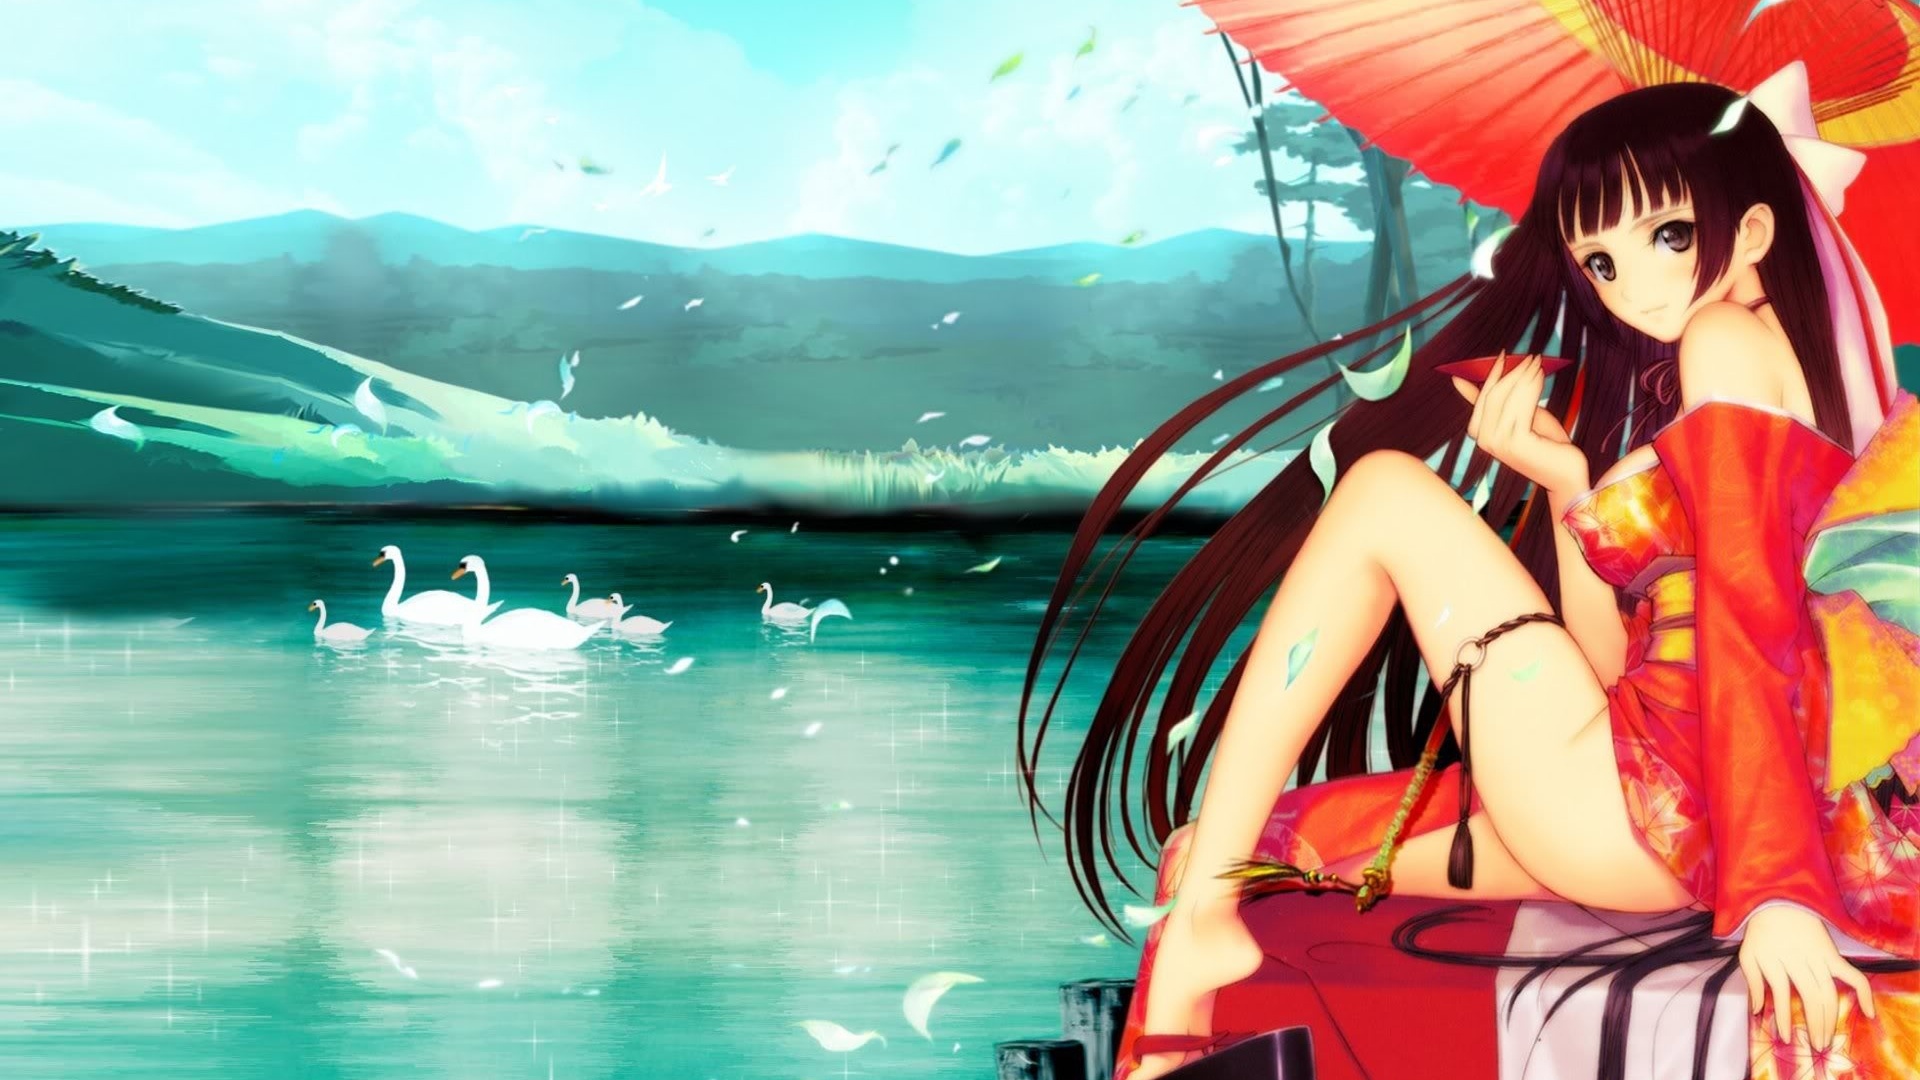 Anime Girl Swans Water Mountains Umbrella